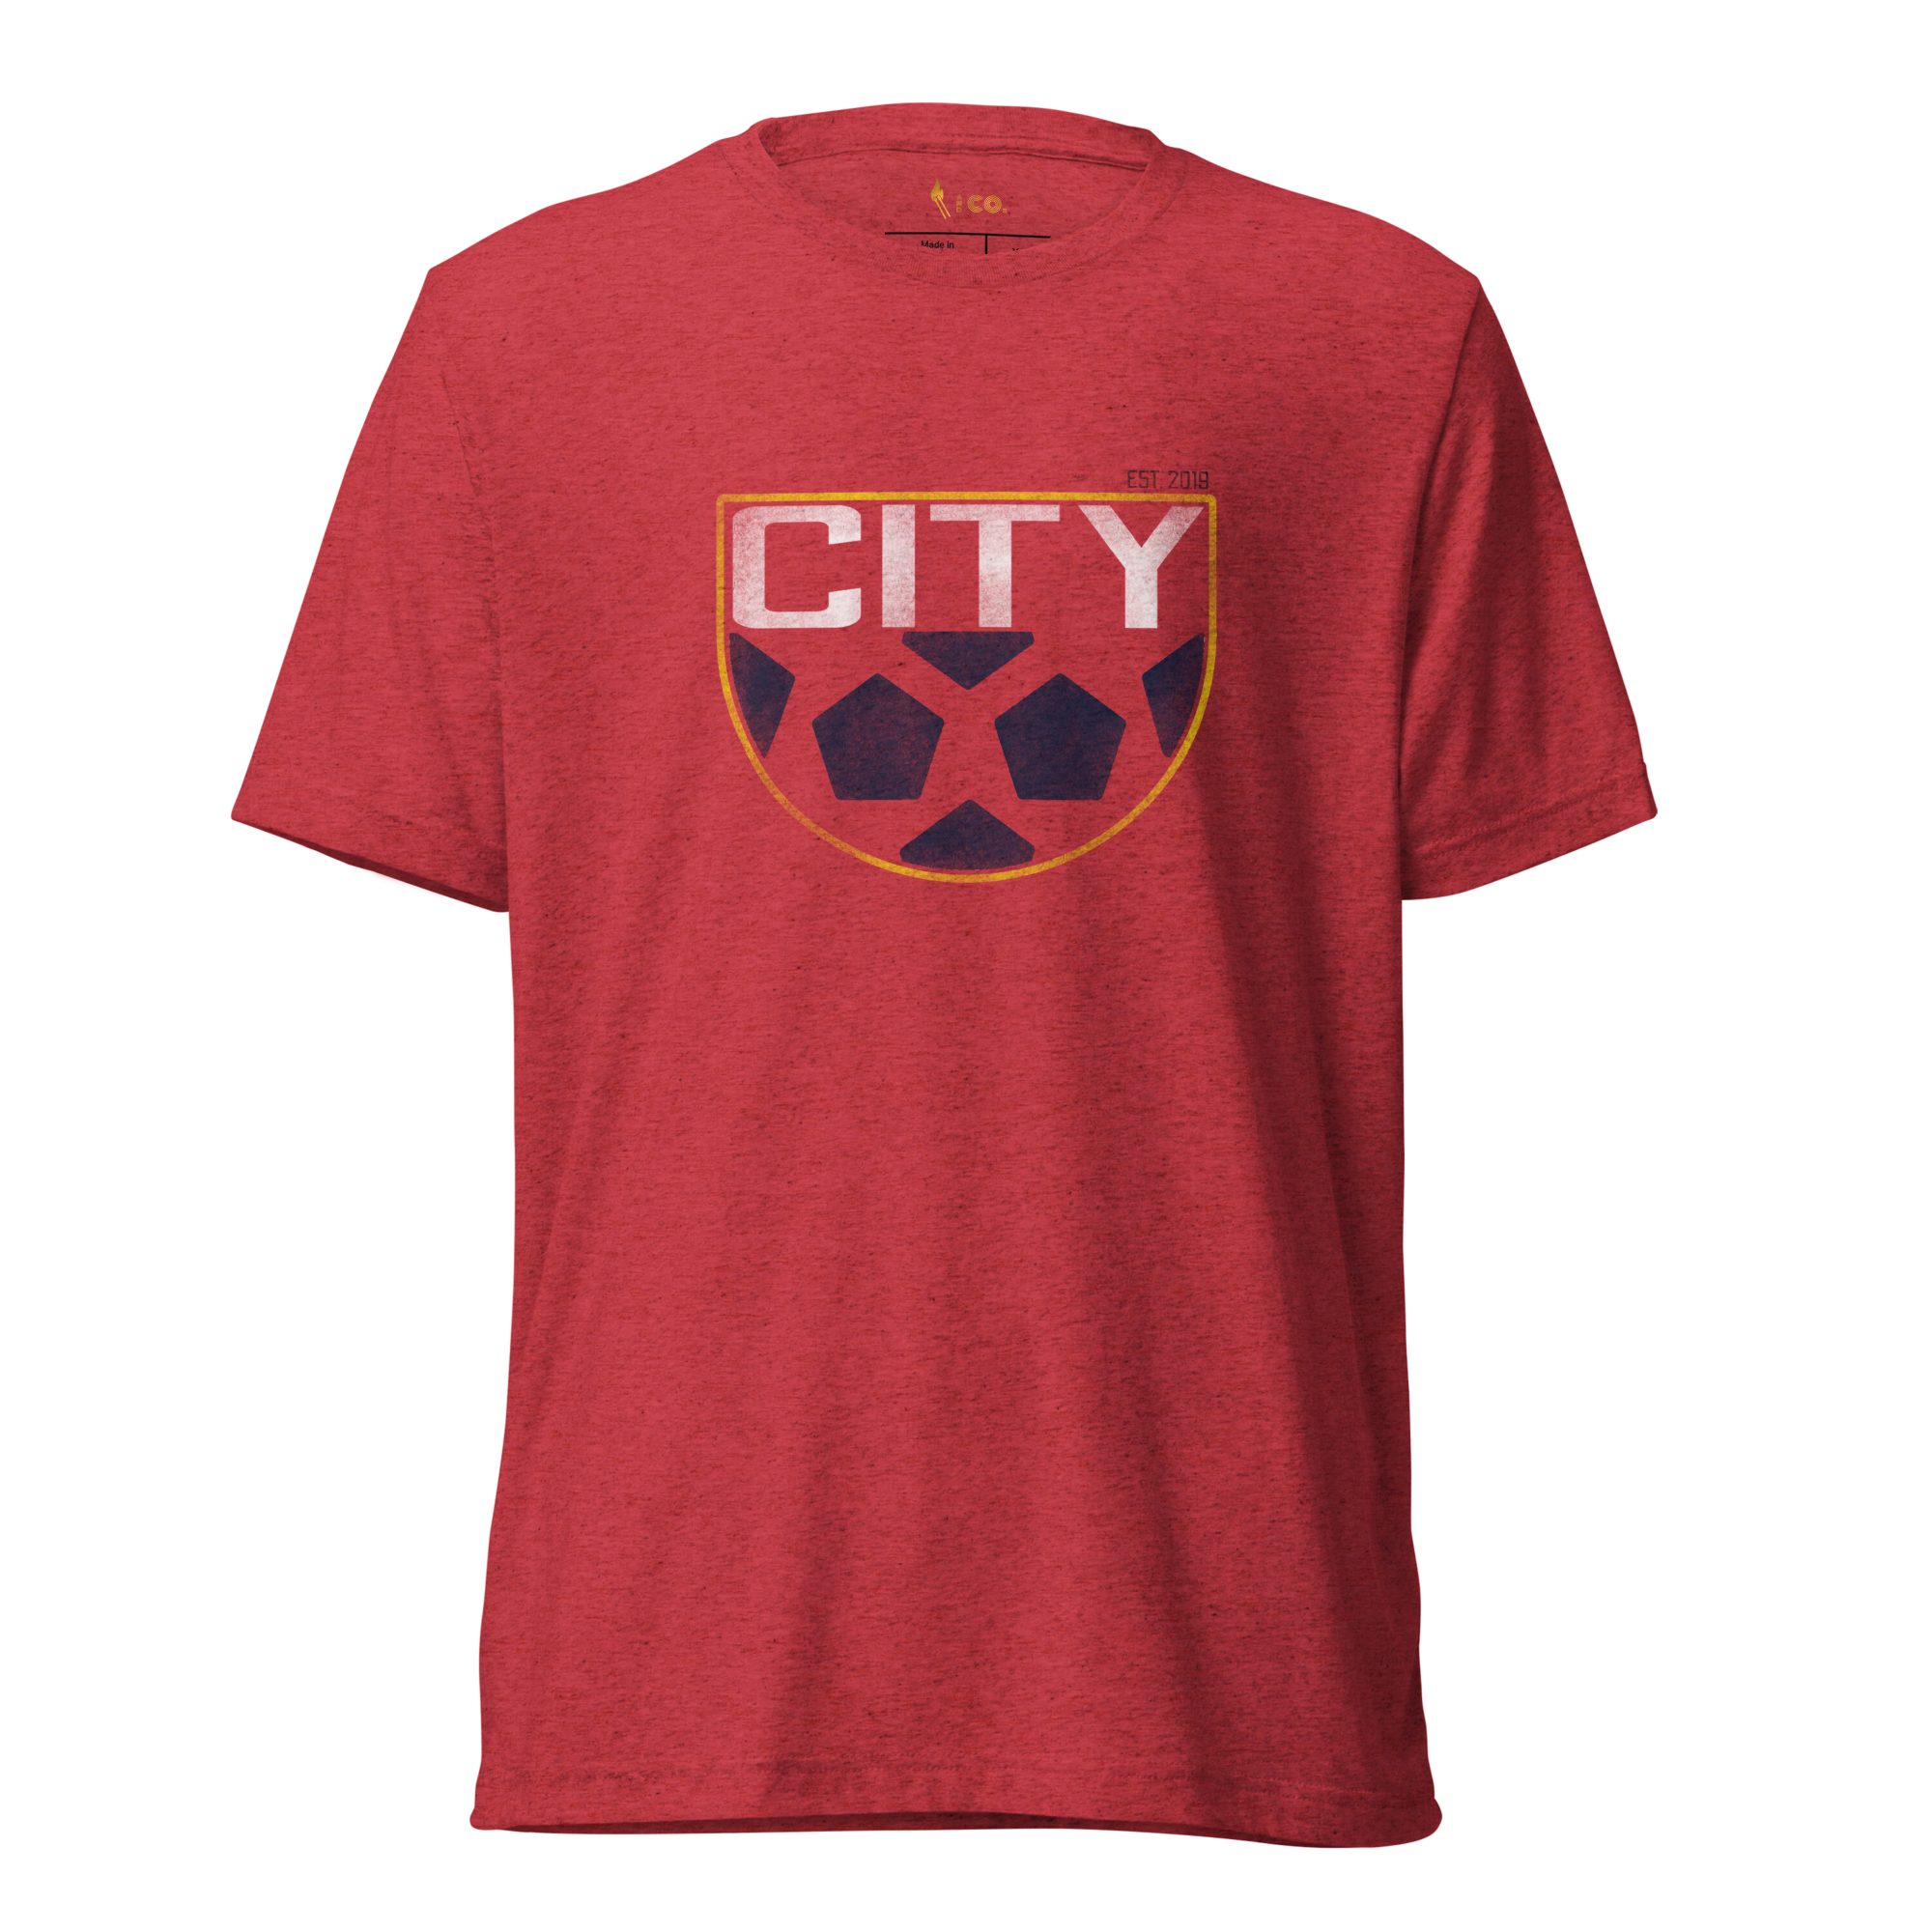 CITY t-shirt